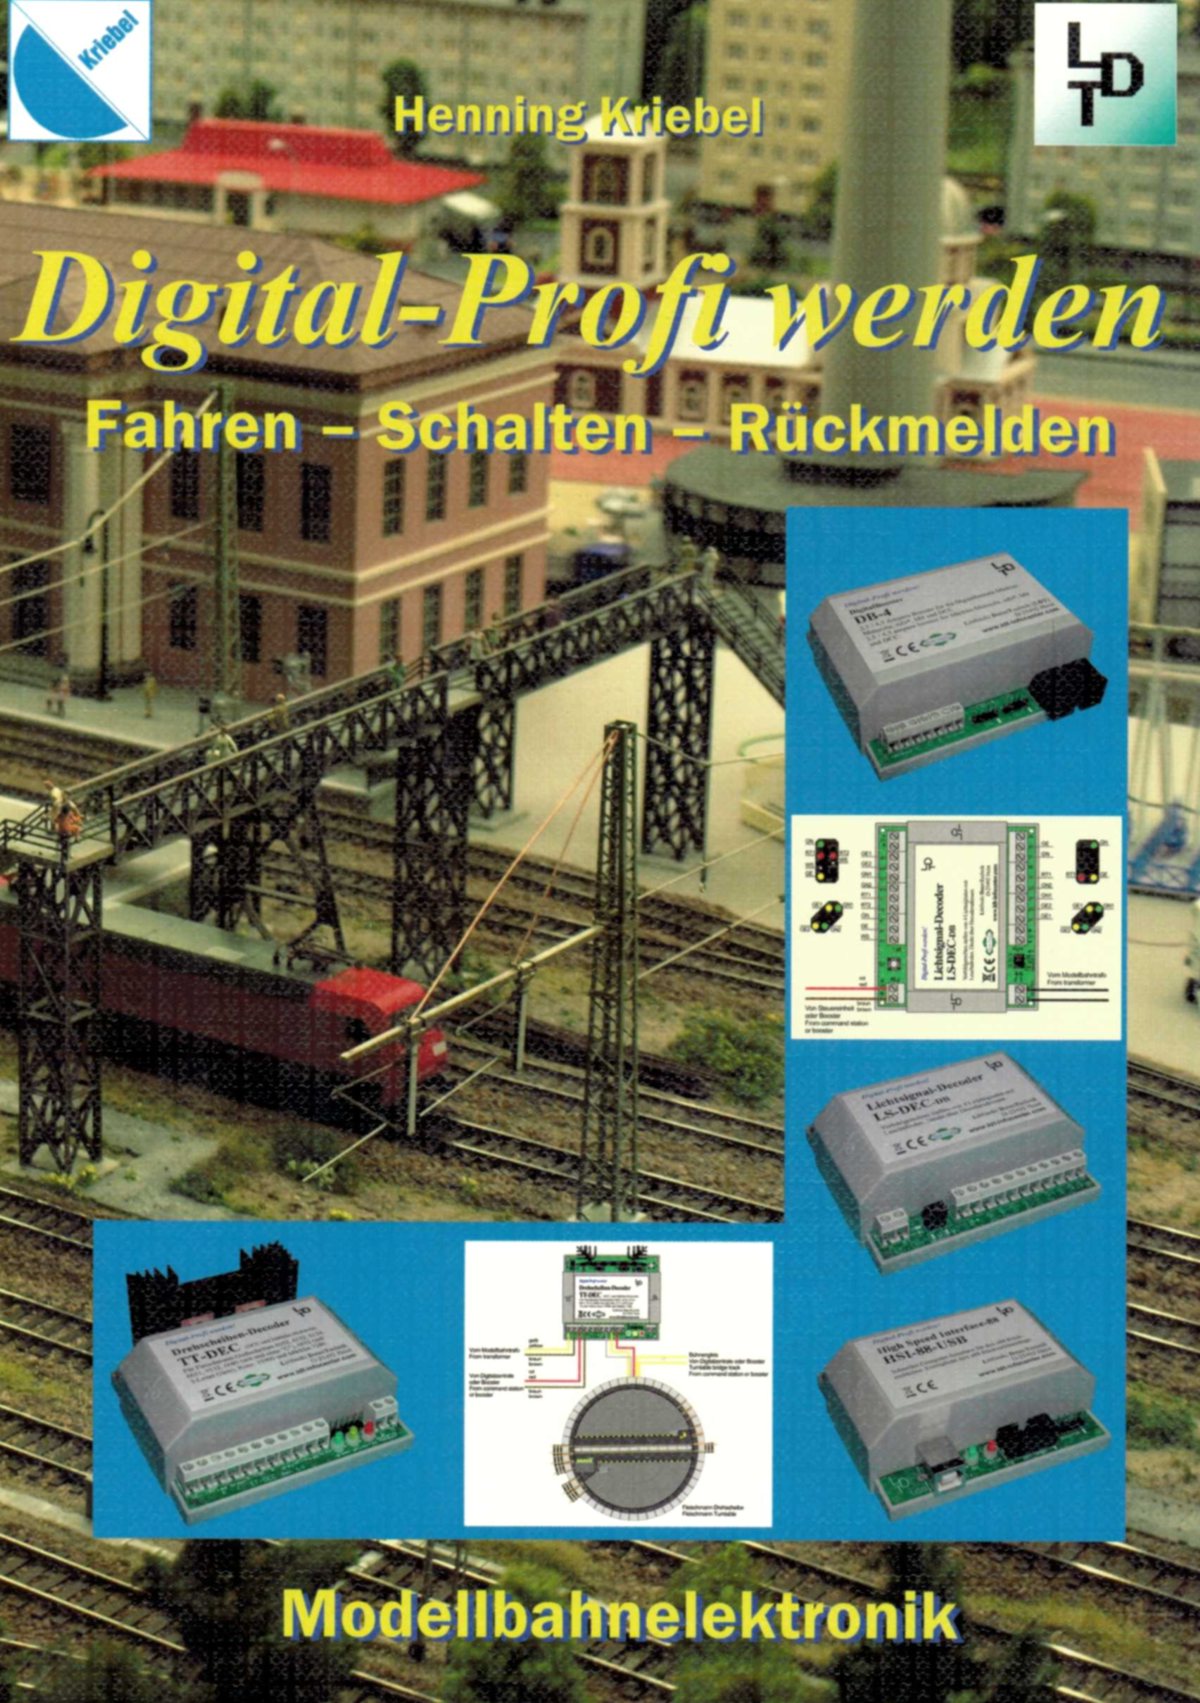 Littfinski 102080 - 102080 - Digital-Profi werden, Fahren-Schalten-Rückmelden